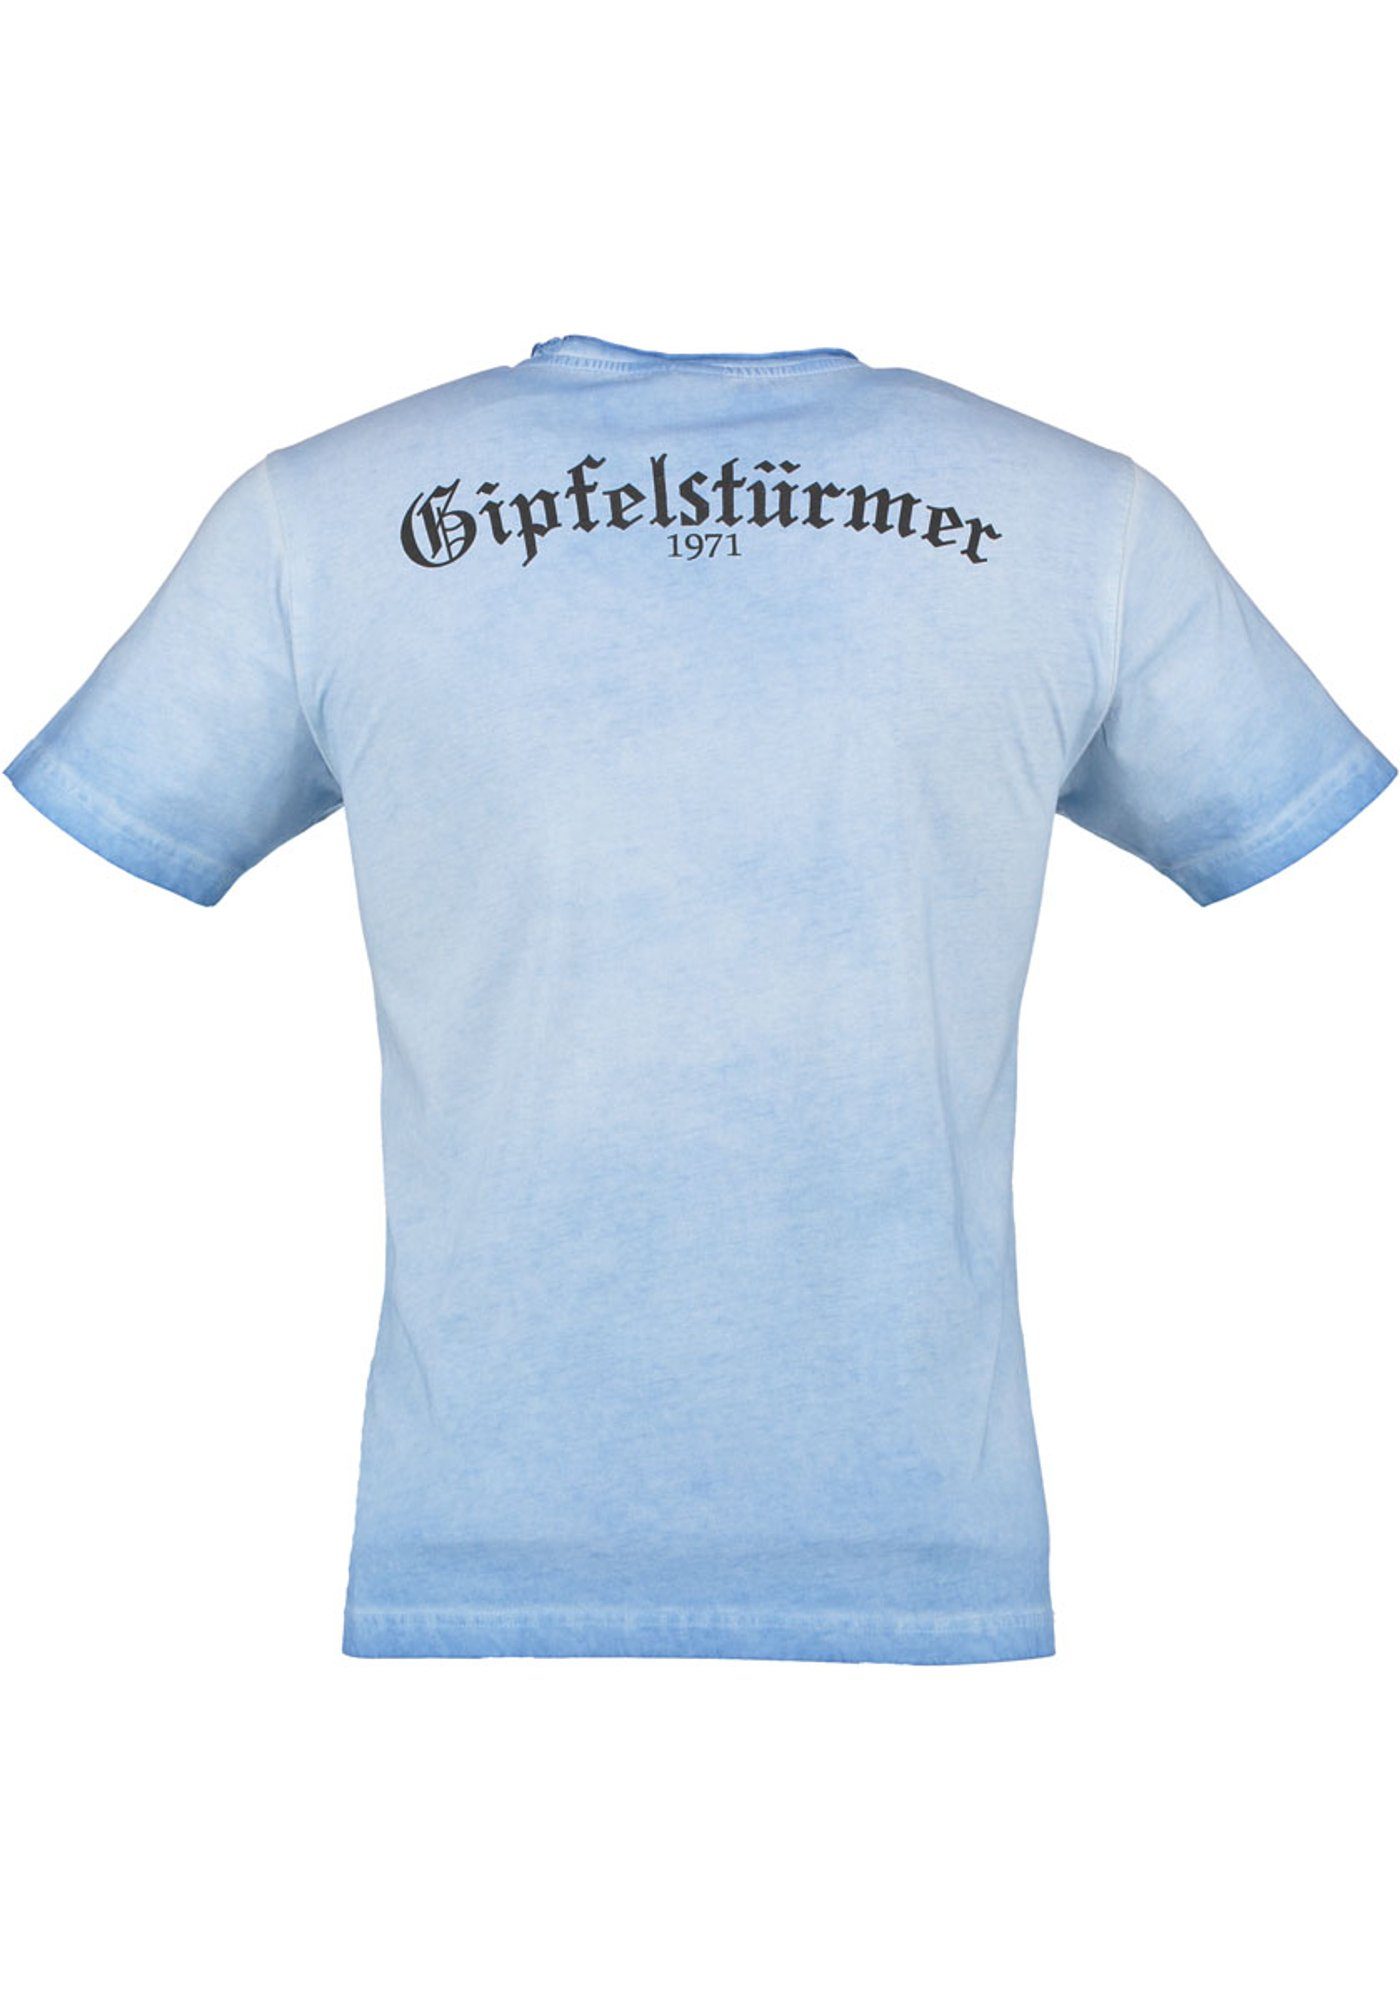 Motivdruck Kurzarm Trachtenshirt Lyusop T-Shirt kornblau OS-Trachten mit